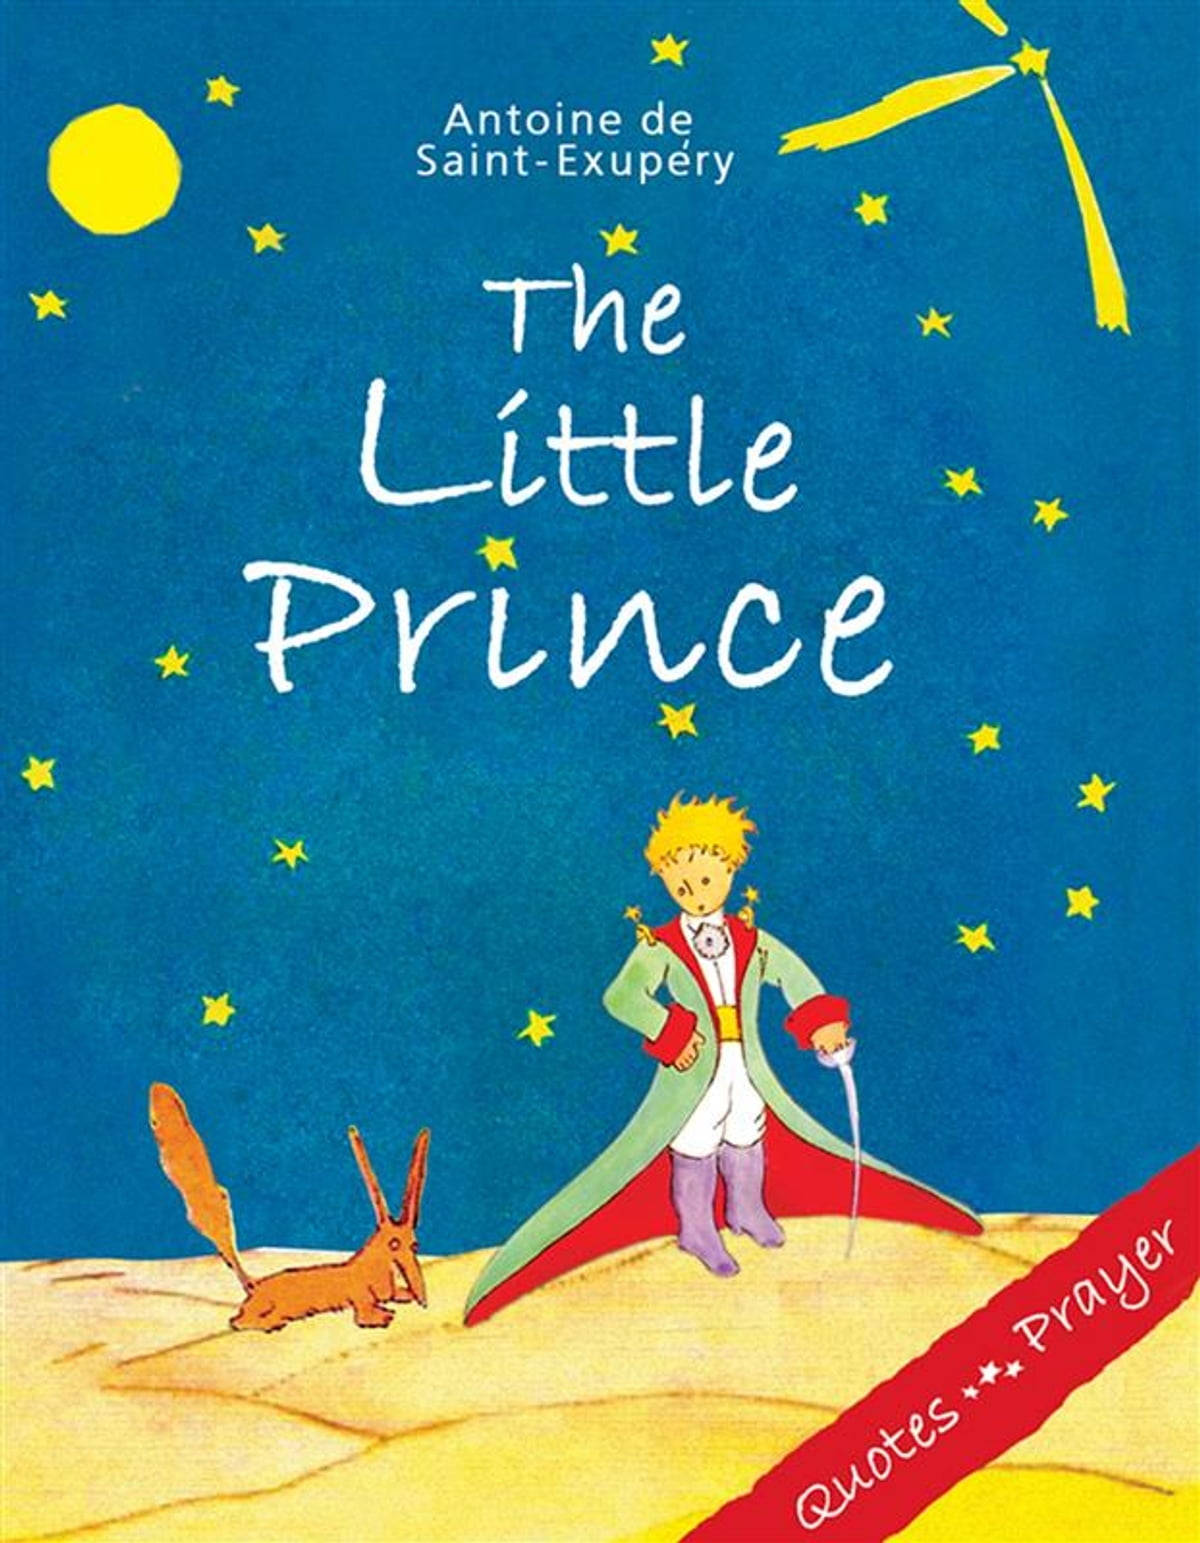 The Little Prince Art Poster Wallpaper